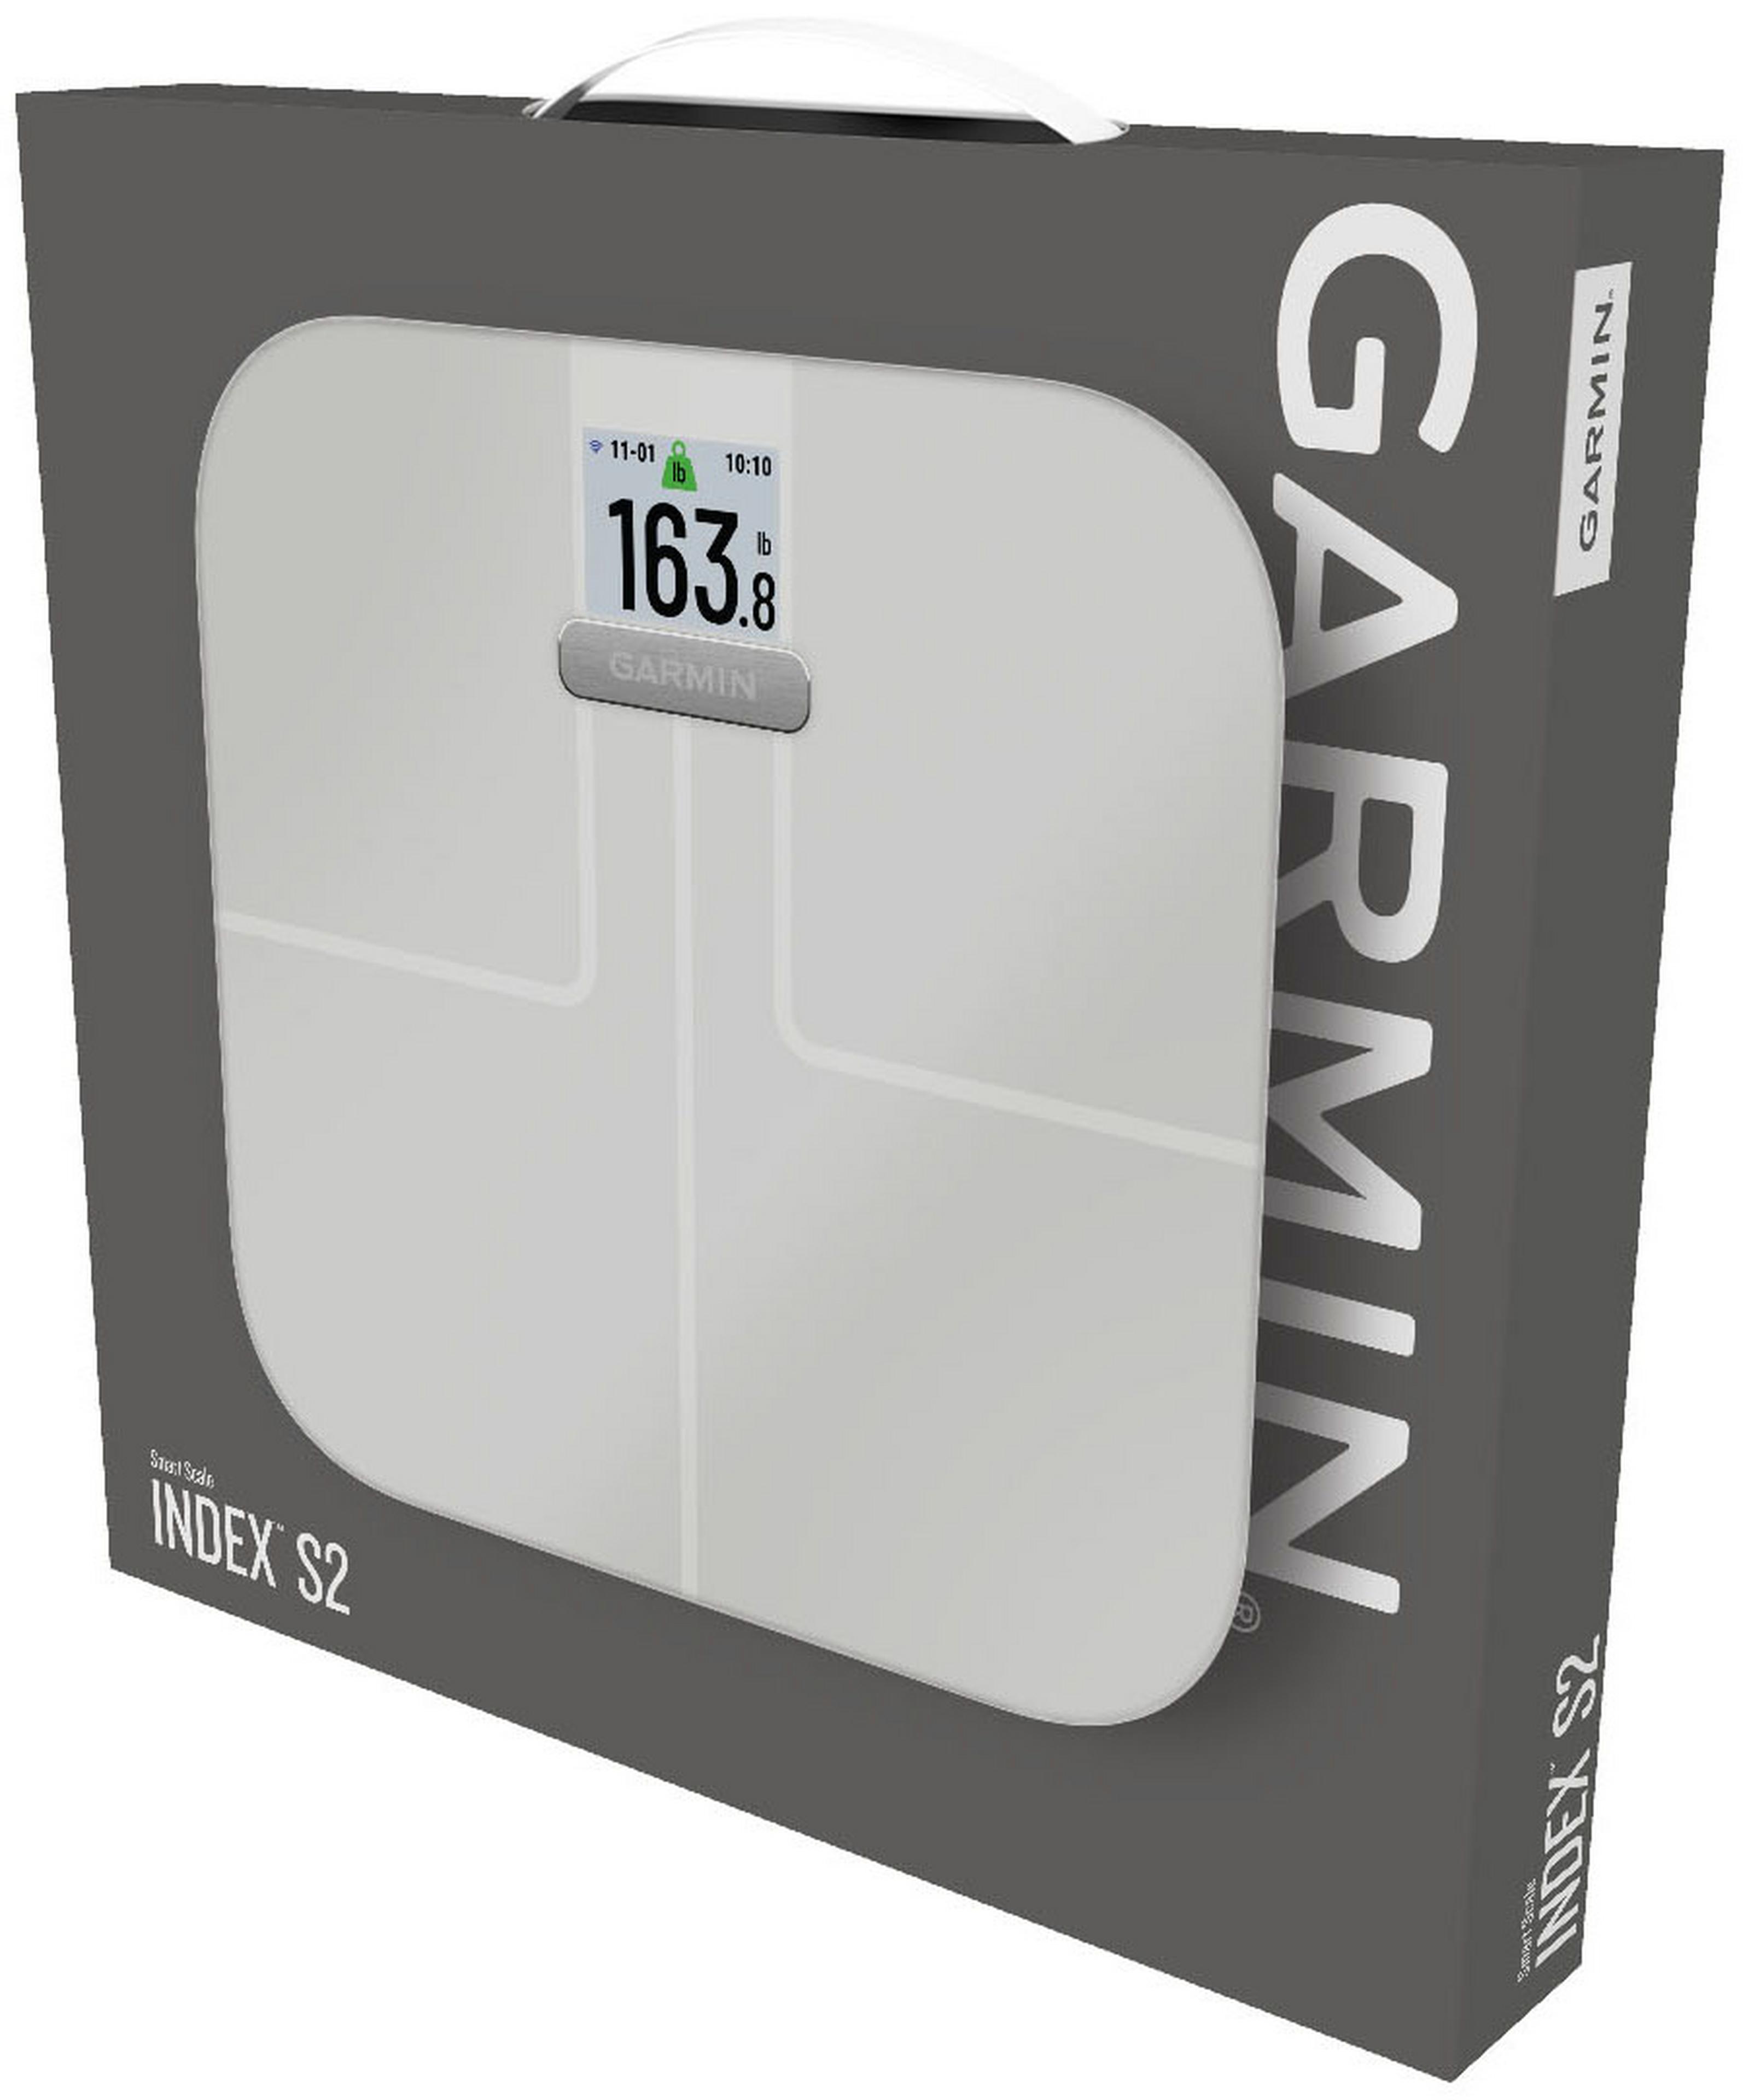 Garmin Index S2 Smart Scale - Black